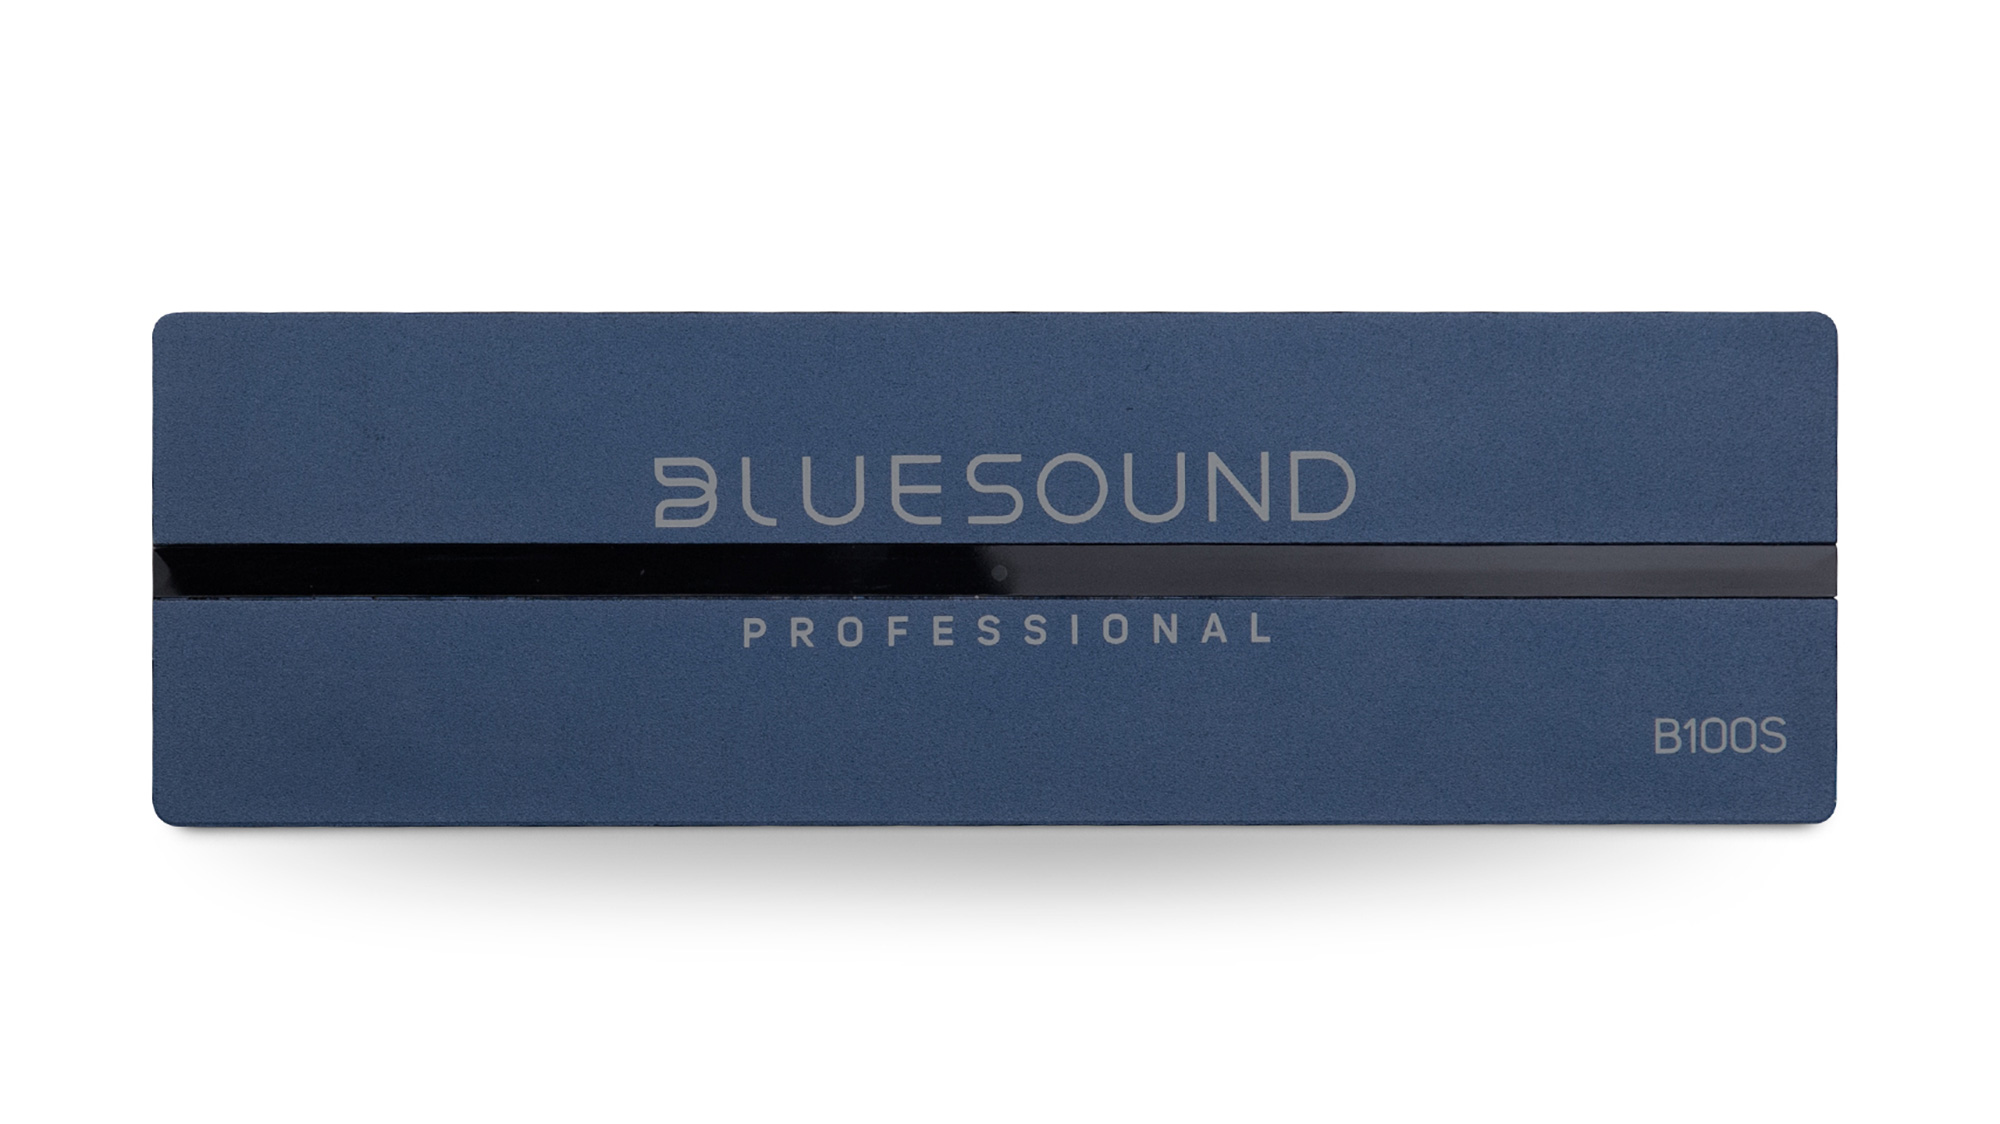 Bluesound Professional B100S Frontansicht